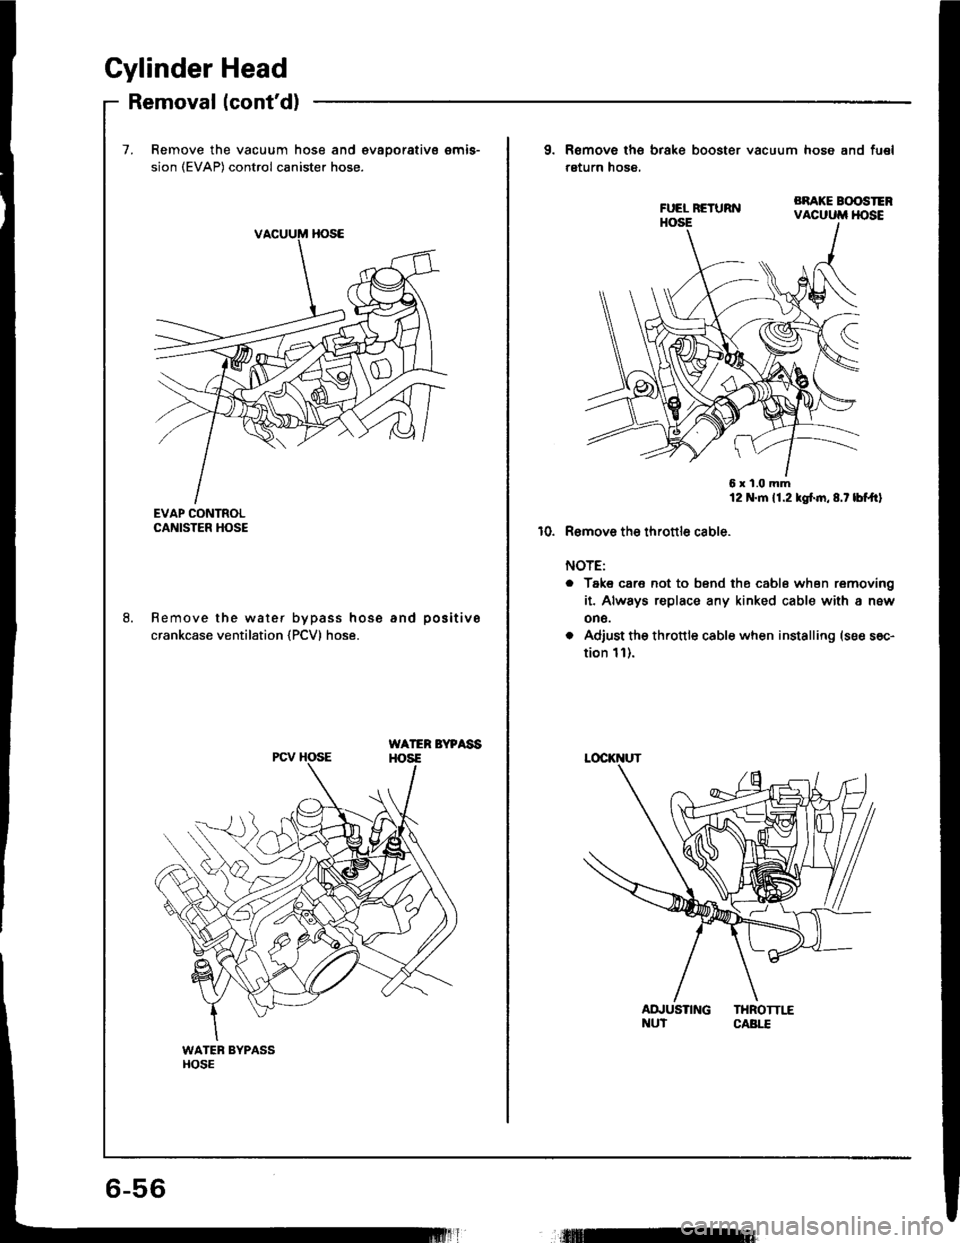 HONDA INTEGRA 1994 4.G Workshop Manual Cylinder Head
Removal (contd)
7. Remove the vacuum hose and €vaoorativs emis-
sion (EVAP) control canister hose.
EVAP CONTROLCANISTER HOSE
Remove the water bypass hose and positive
crankcase ventil